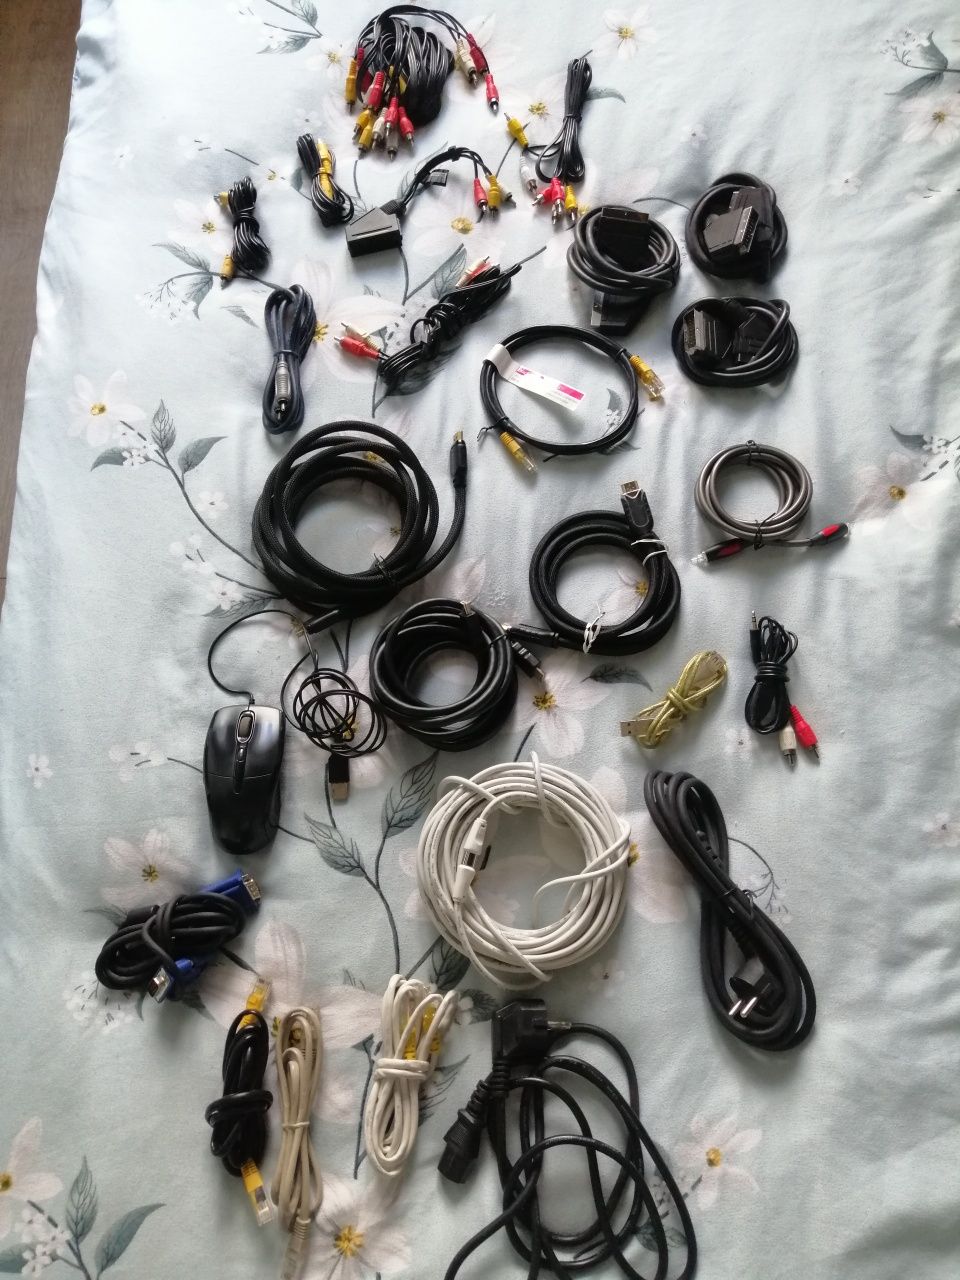 Cabluri HDMI, RCA, internet, etc